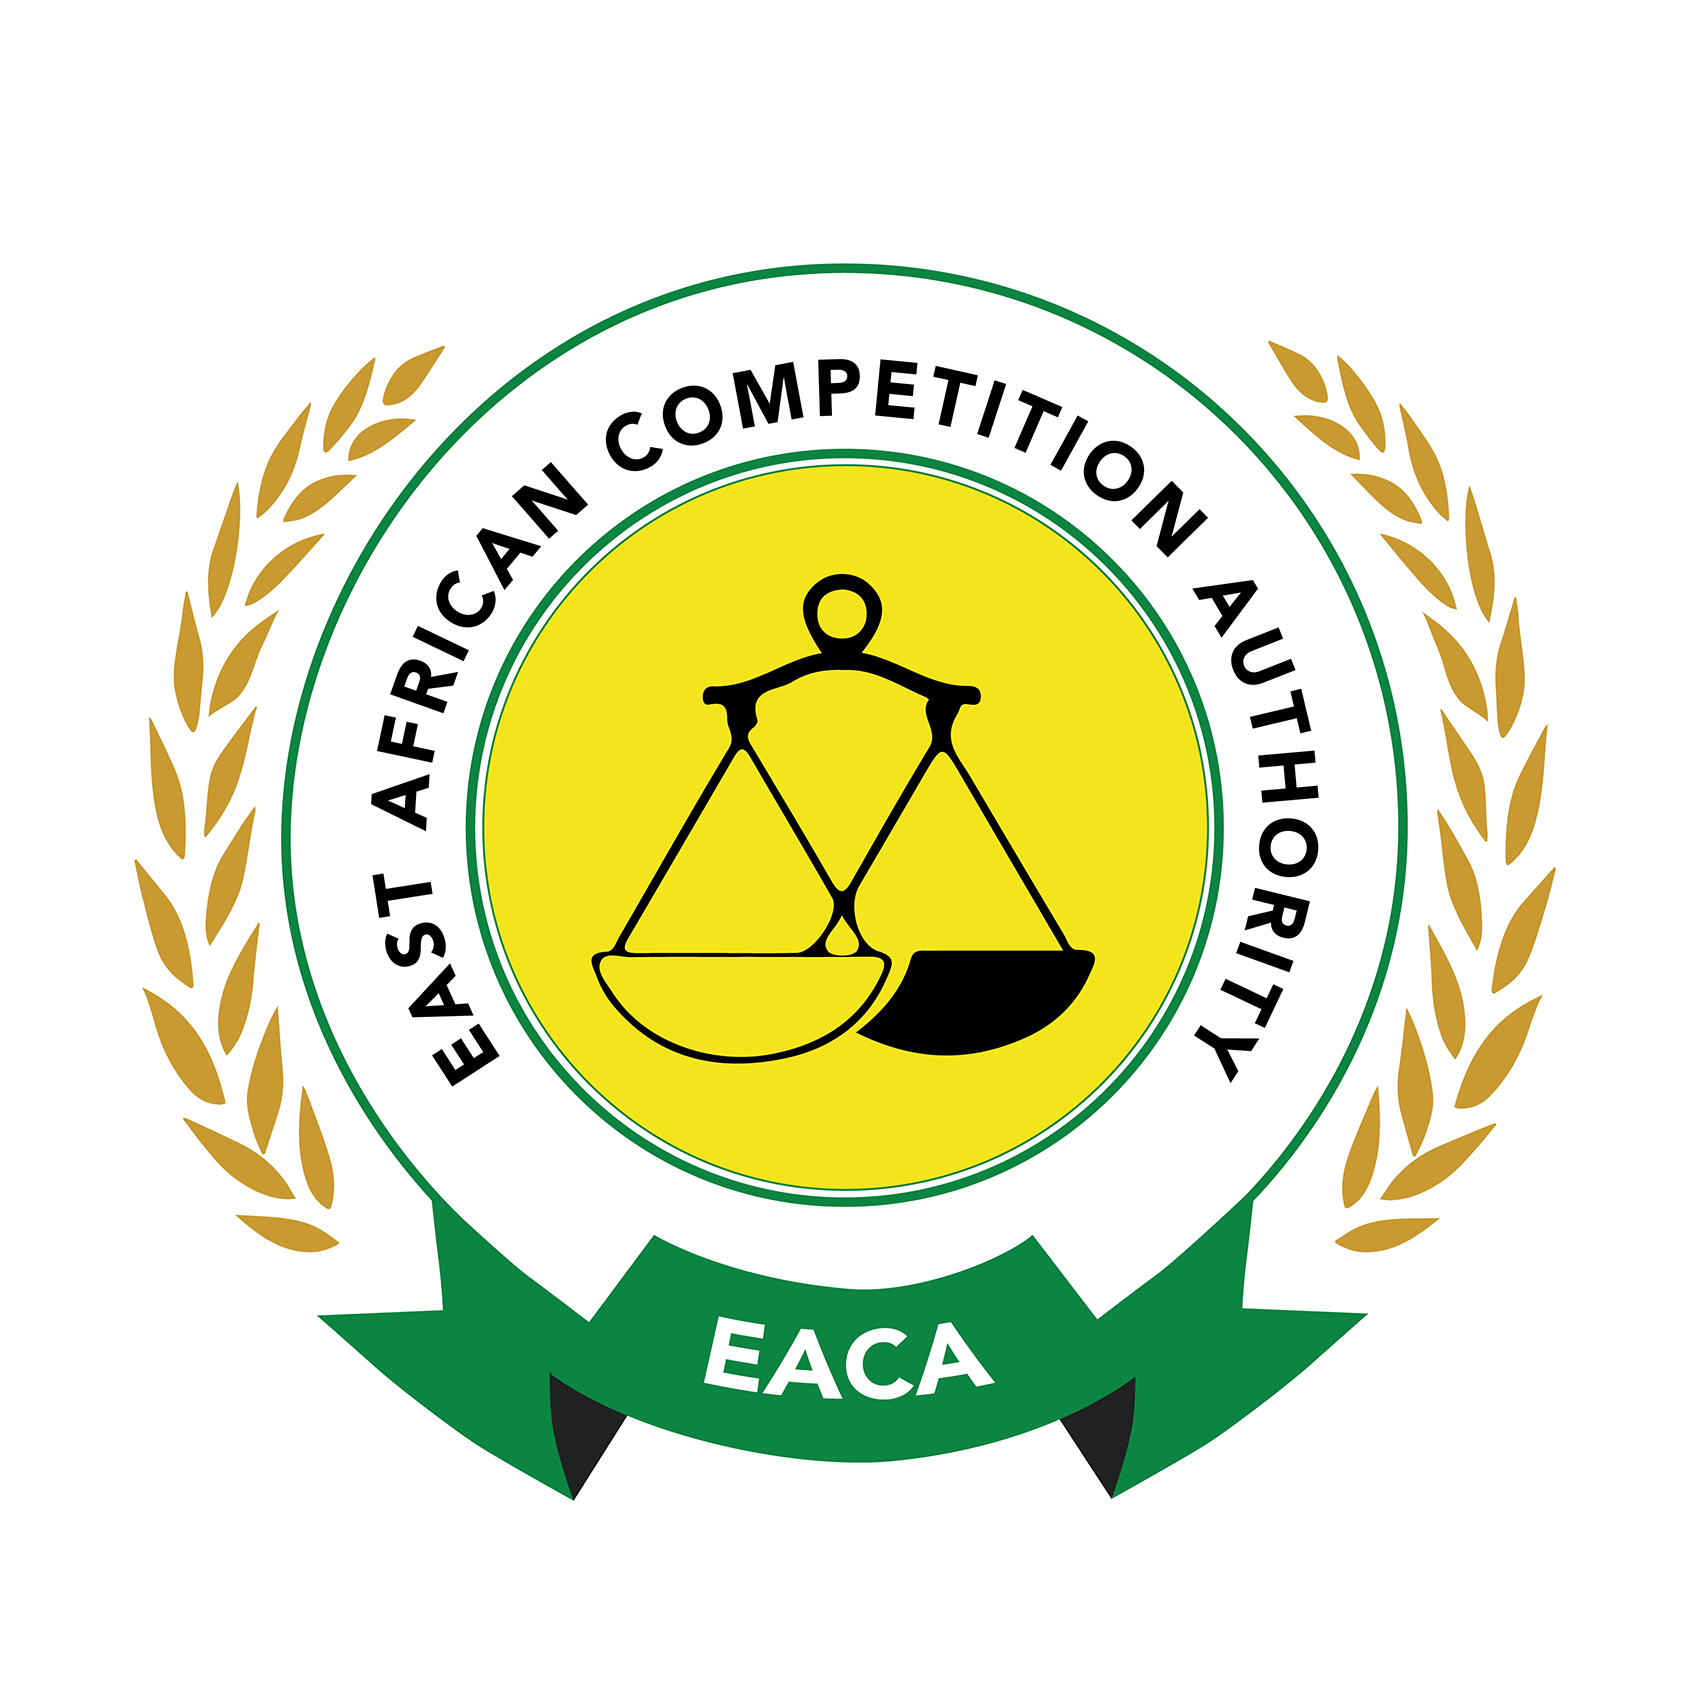 East Africa Community